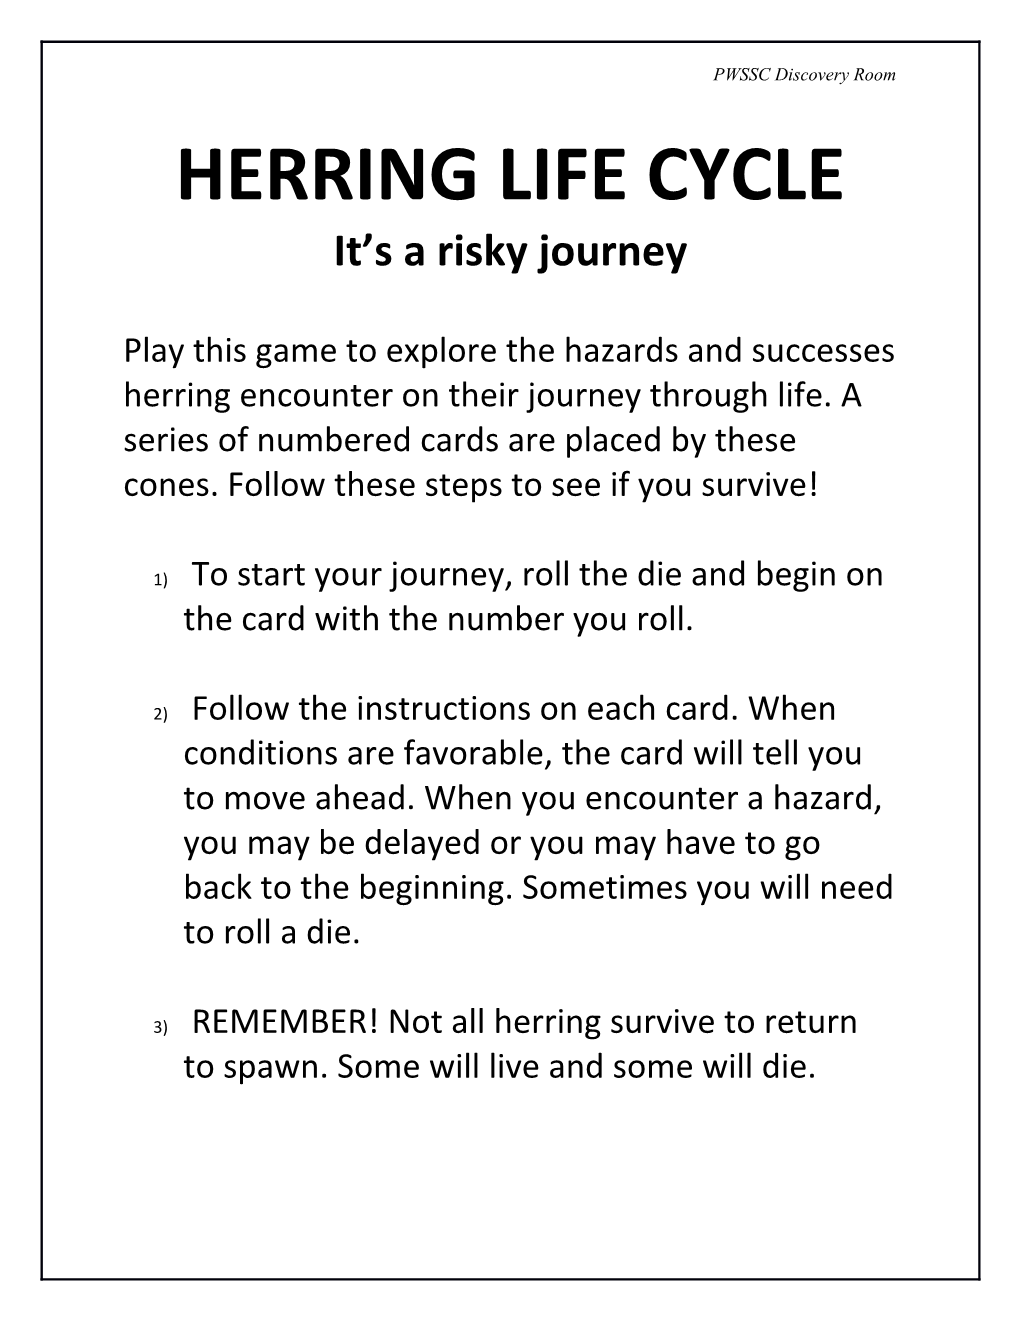 Herring Life Cycle